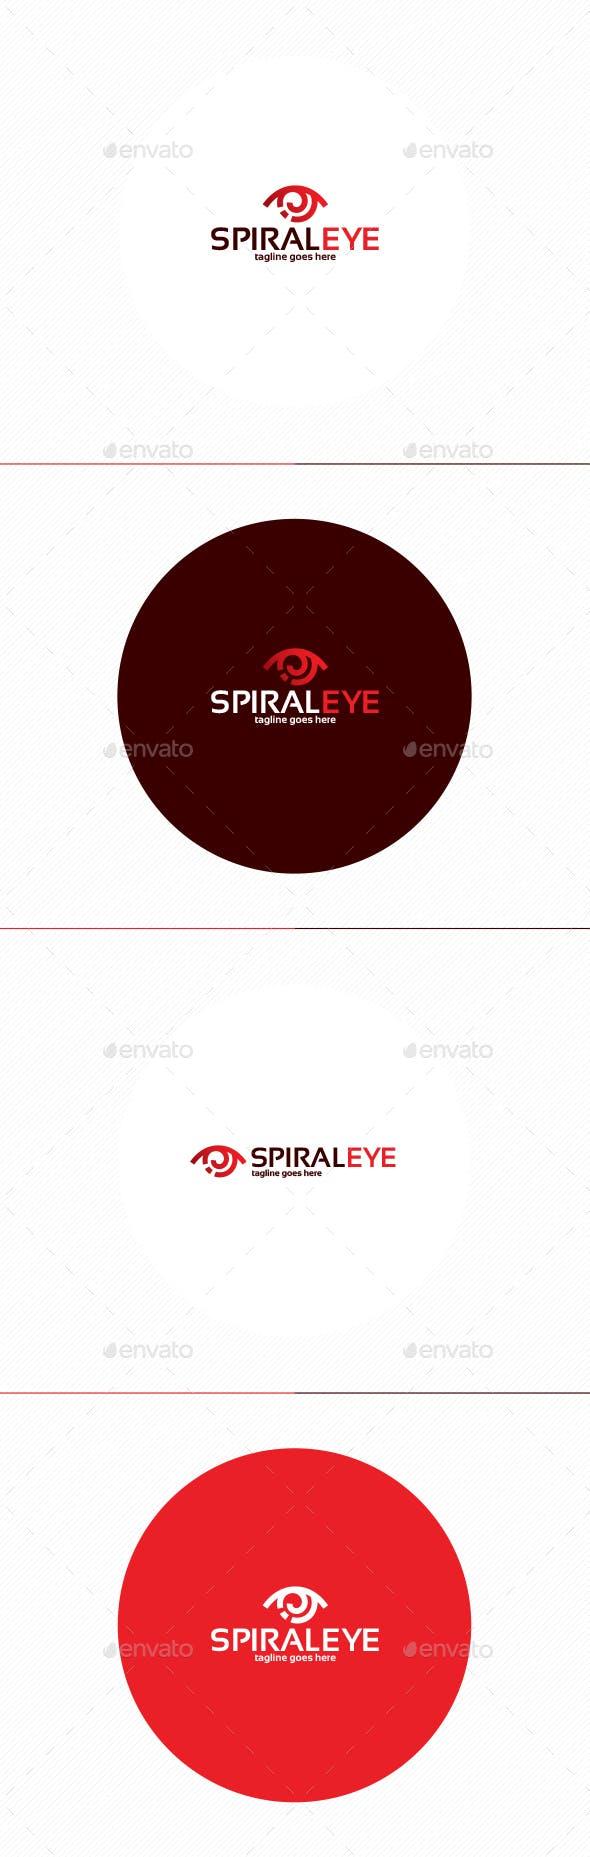 Eye Ball Spiral Logo - Spiral Eye Logo